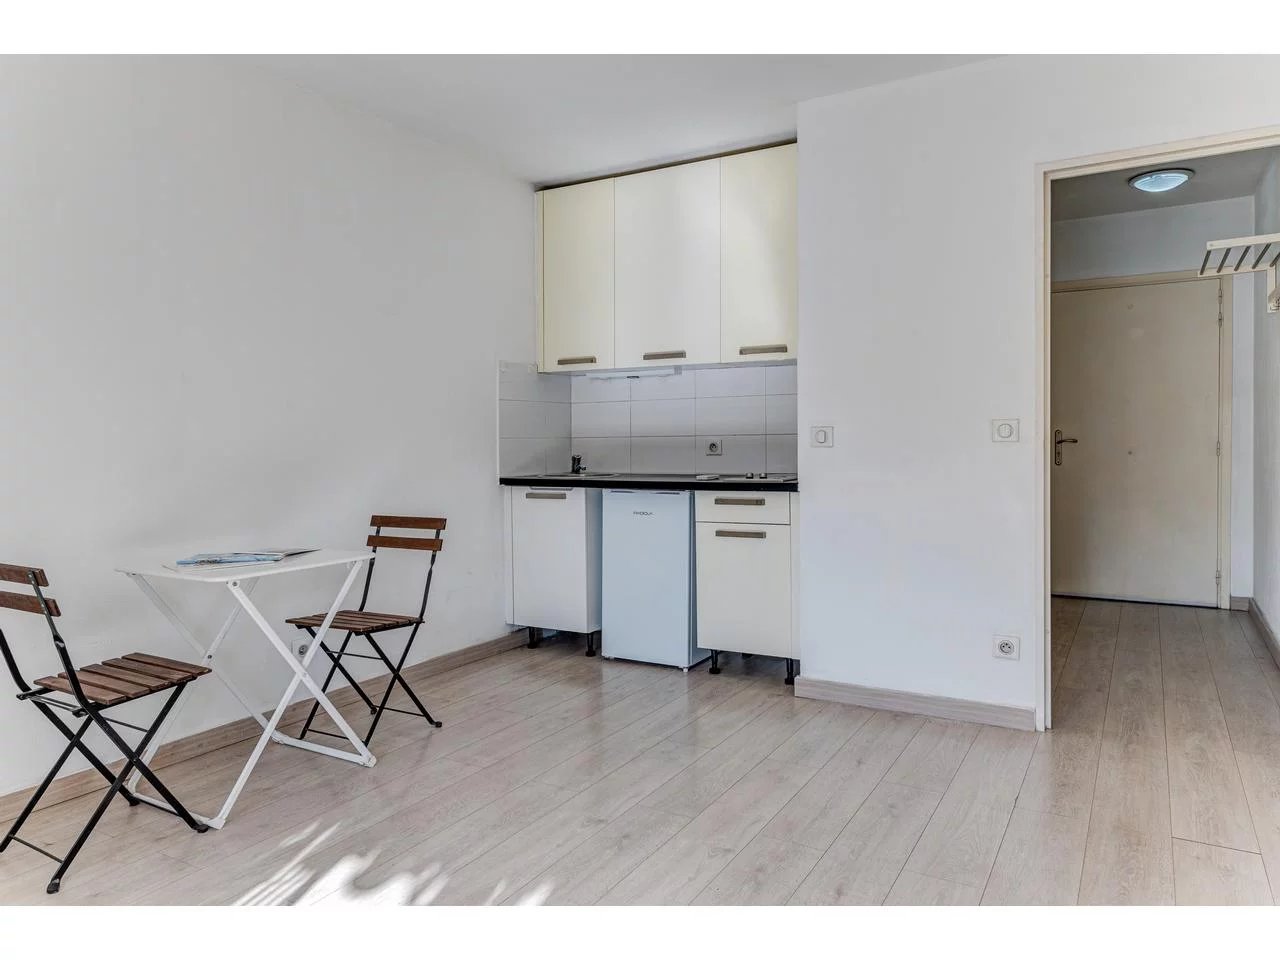 Appartement  1 Locali 23m2  In vendita   210 000 €